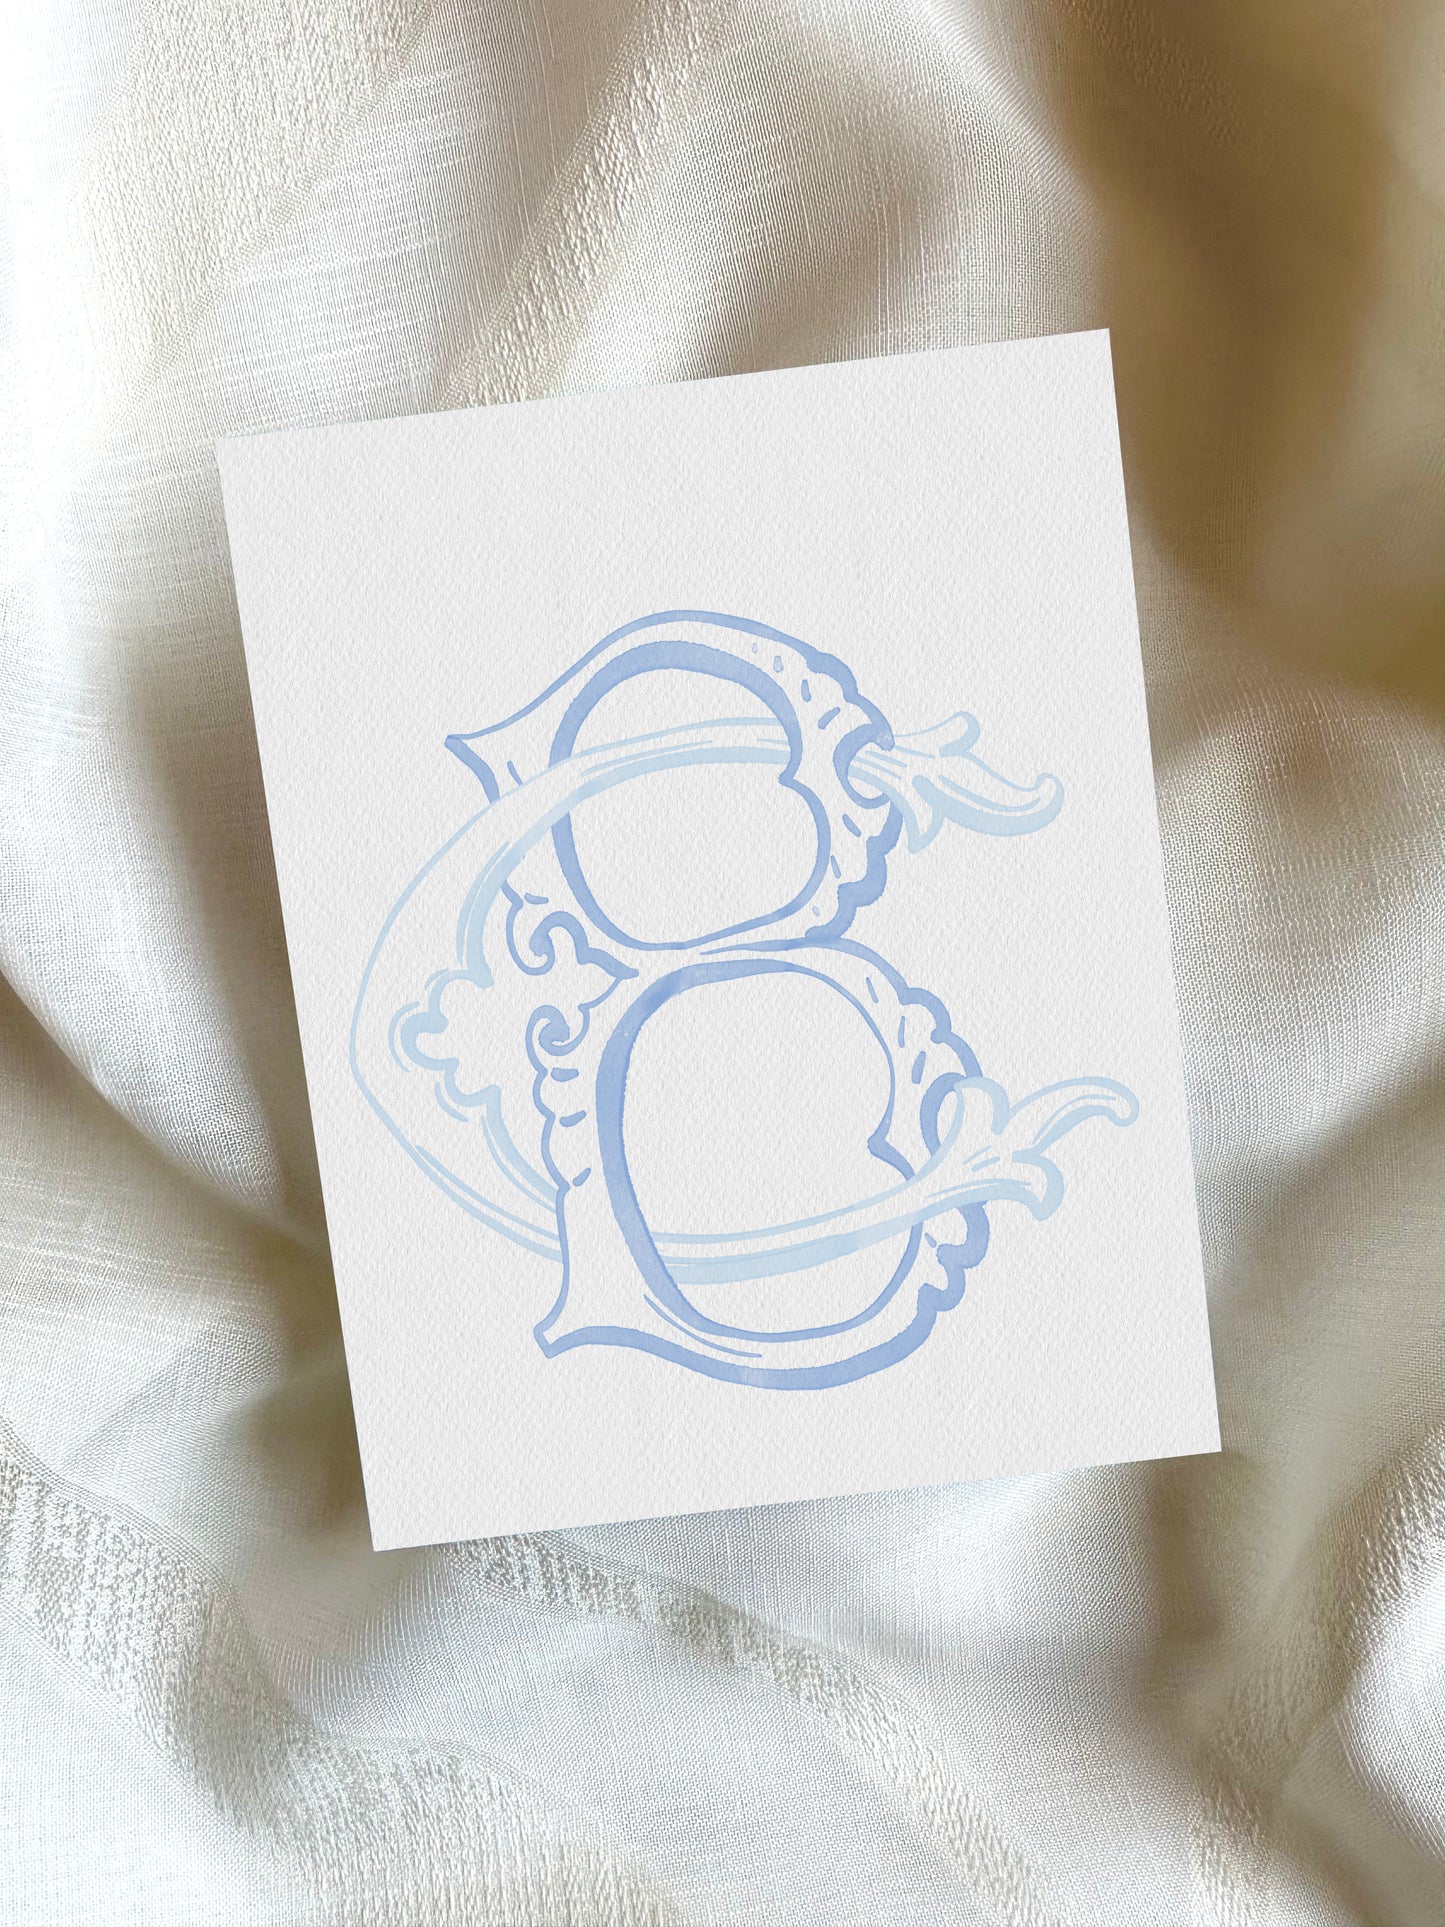 2 Letter Monogram with Letters BC CB | Digital Download - Wedding Monogram SVG, Personal Logo, Wedding Logo for Wedding Invitations The Wedding Crest Lab